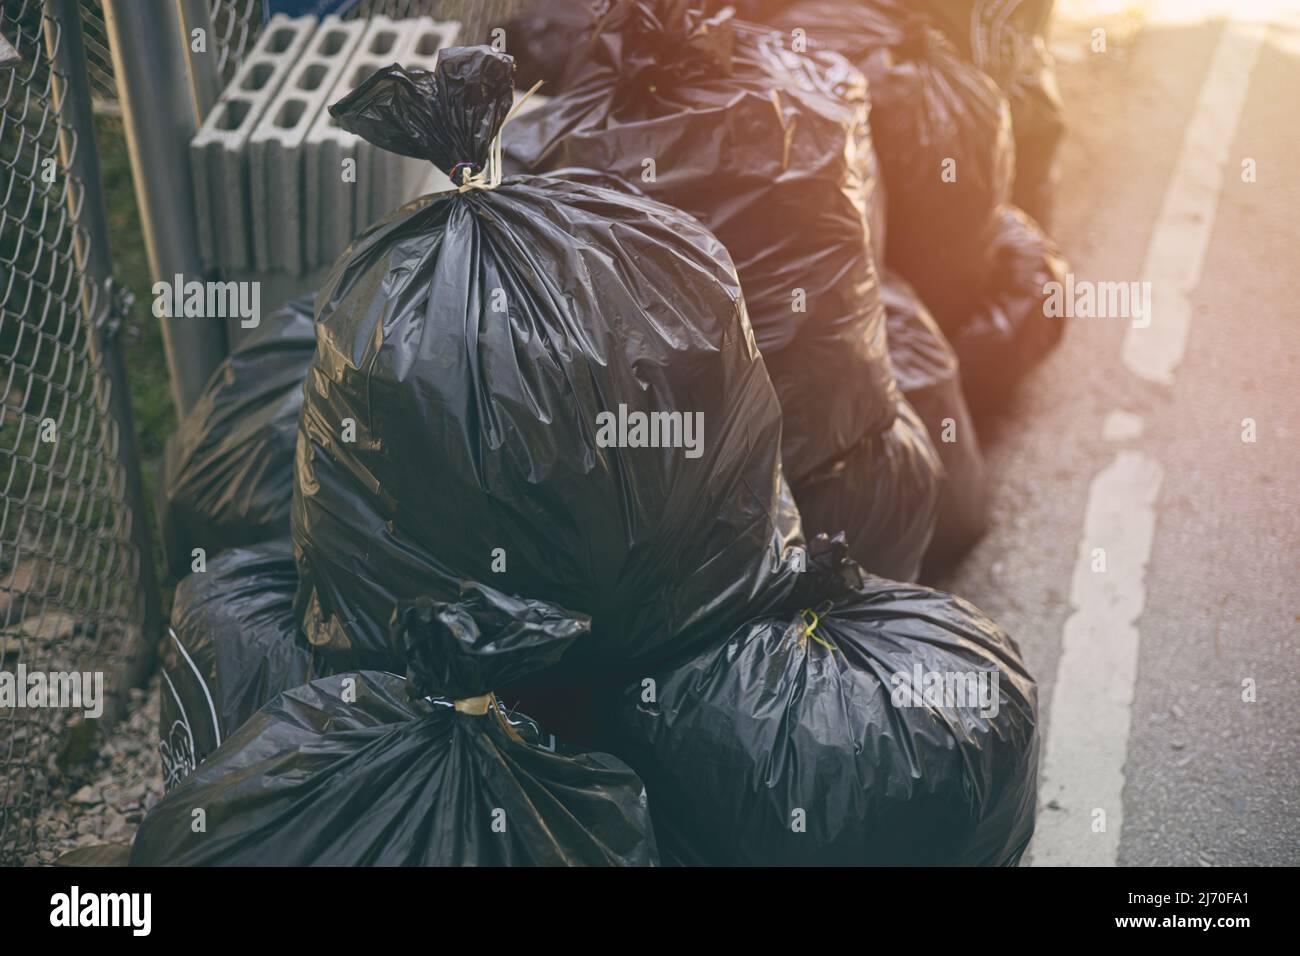 https://c8.alamy.com/comp/2J70FA1/pile-of-black-garbage-bags-city-waste-management-good-hygiene-2J70FA1.jpg